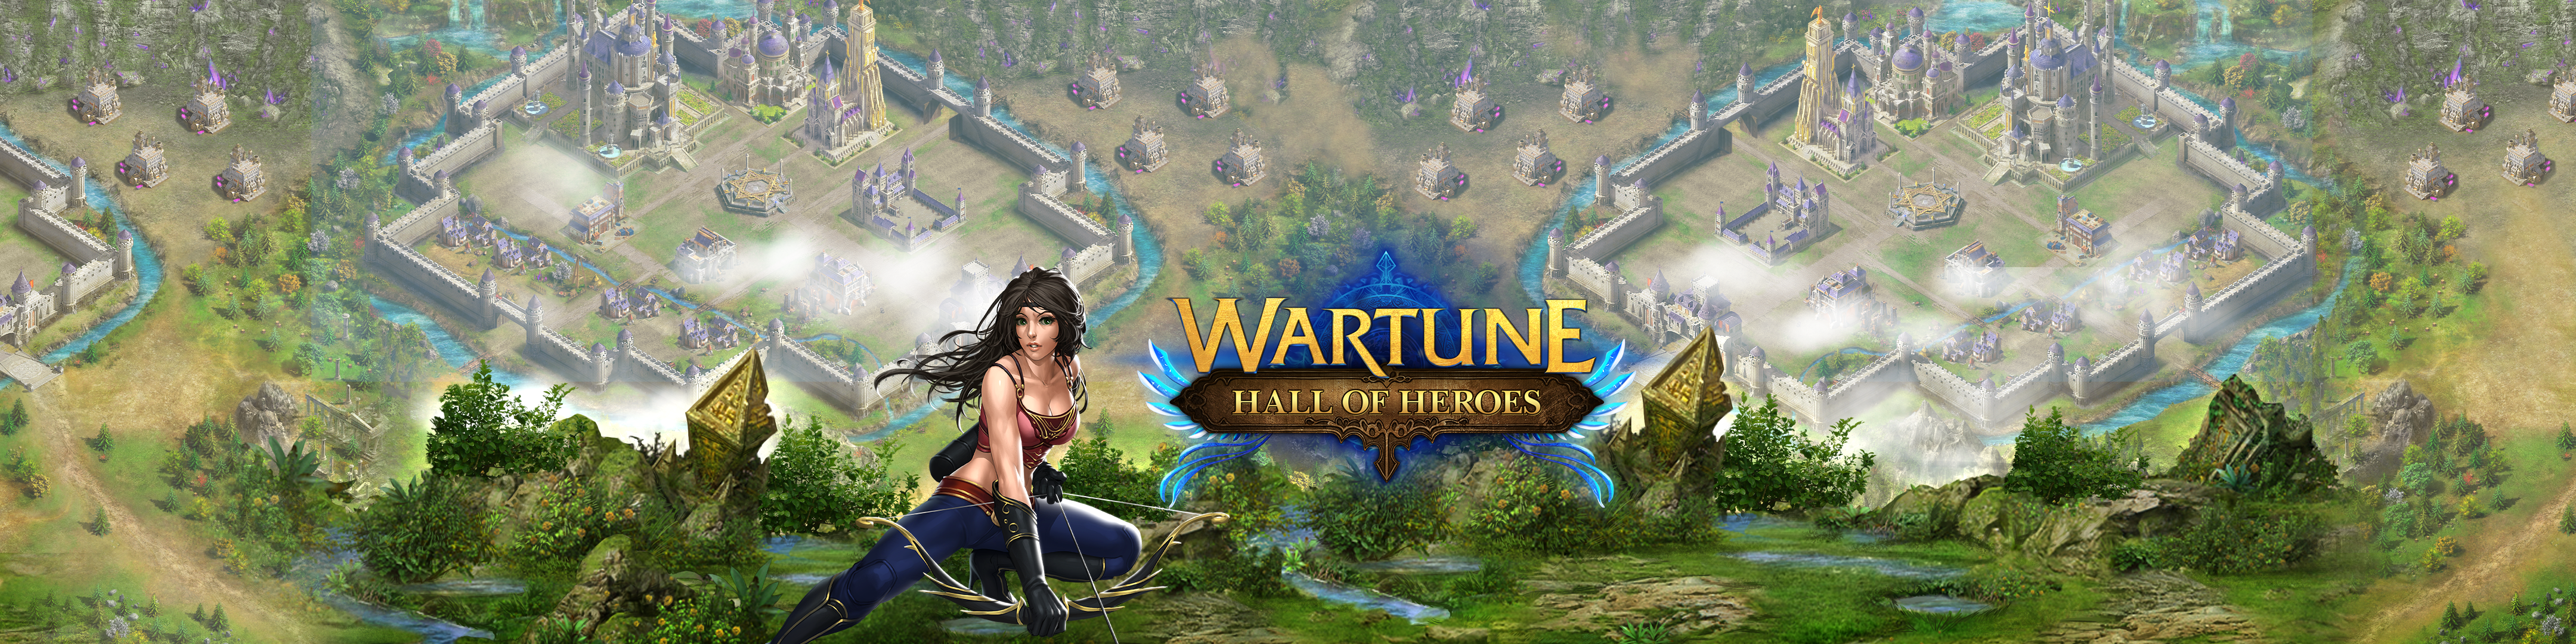 wartune hall of heroes event code 2019